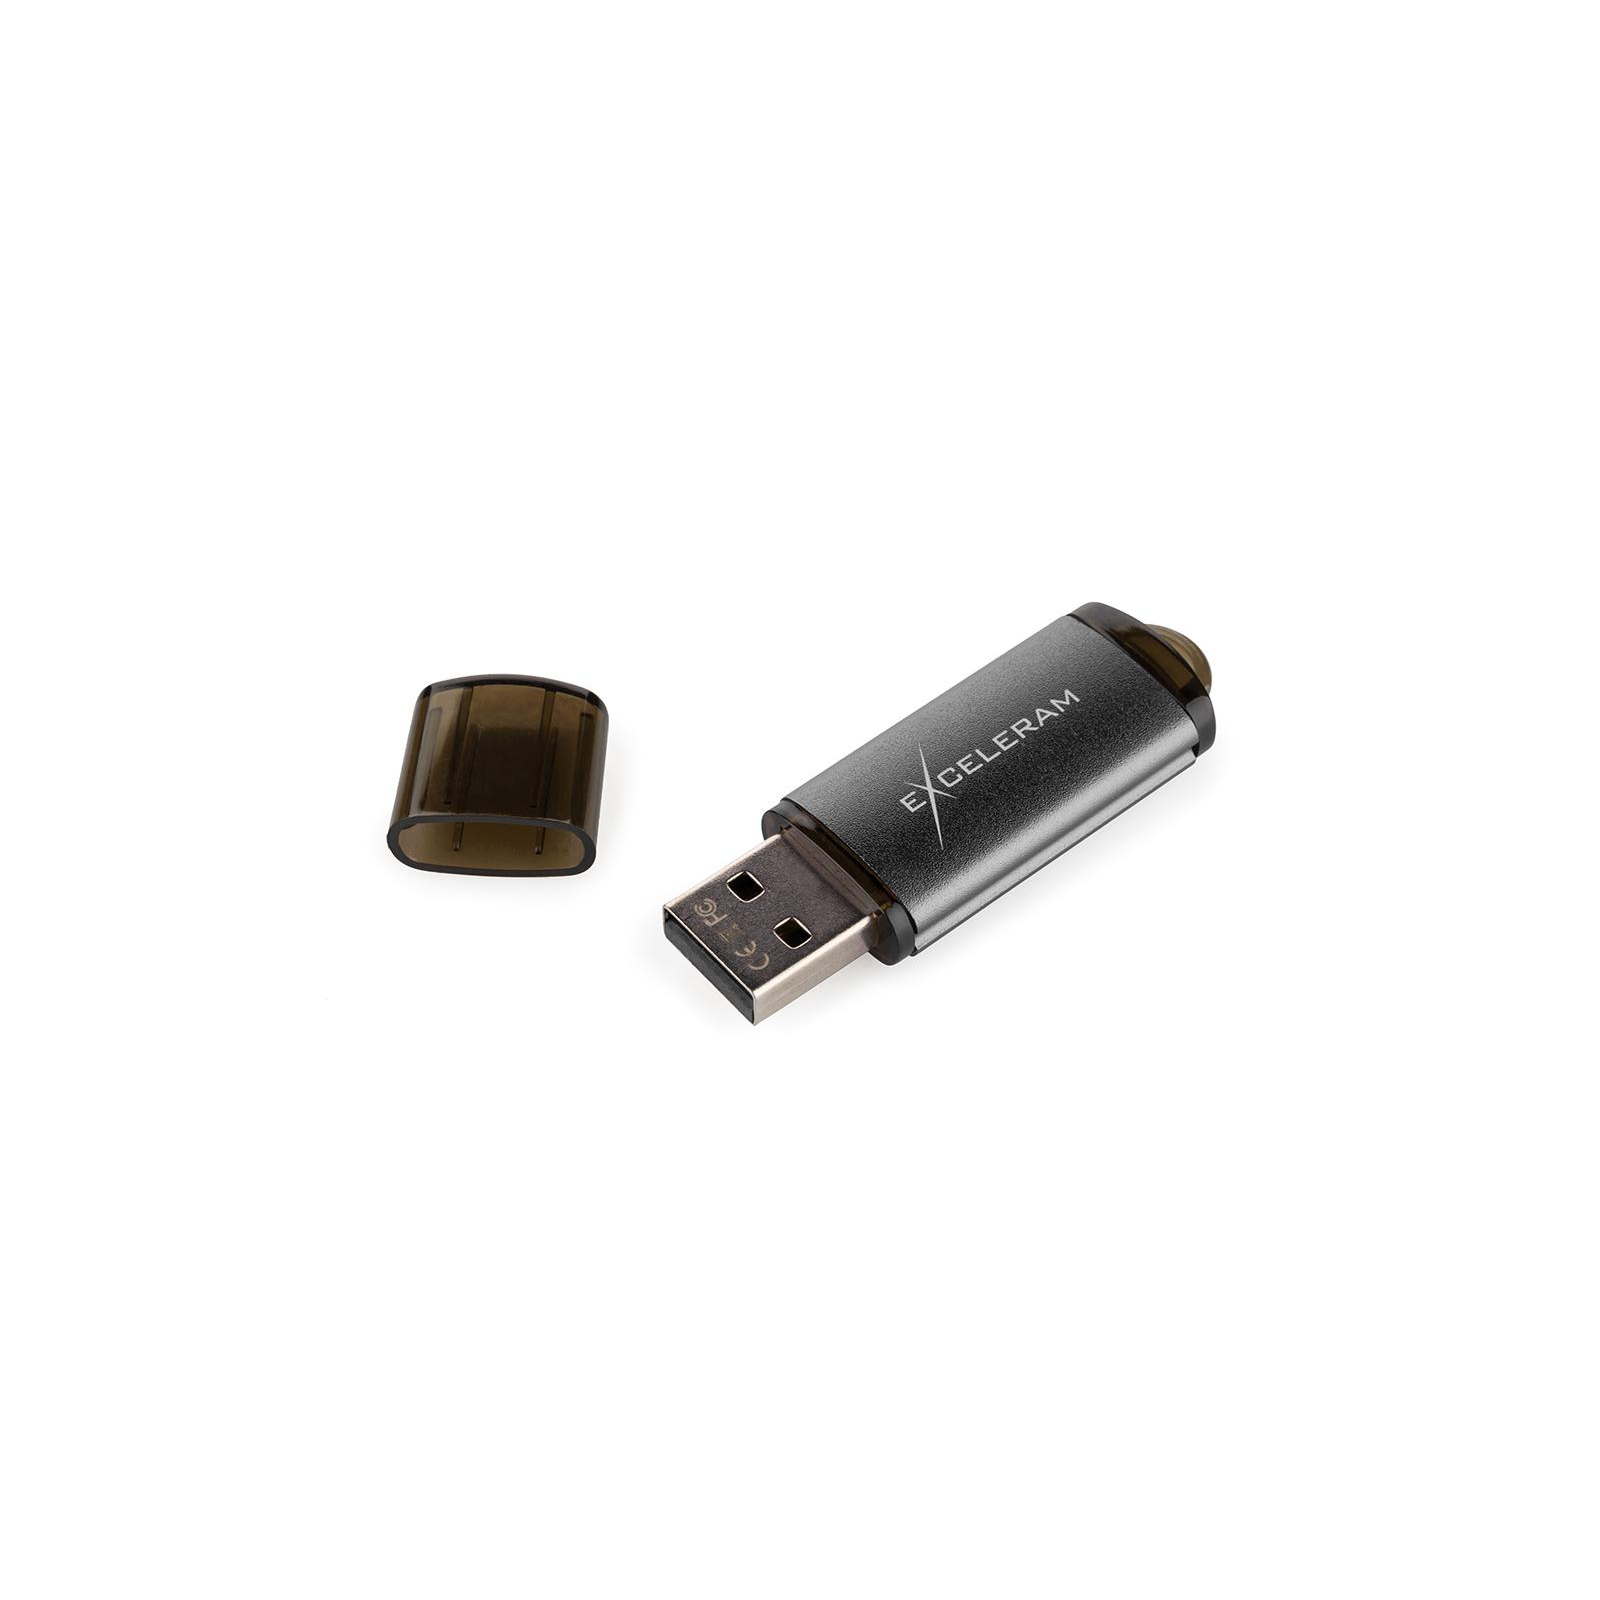 USB флеш накопитель eXceleram 64GB A3 Series Black USB 3.1 Gen 1 (EXA3U3B64) изображение 6